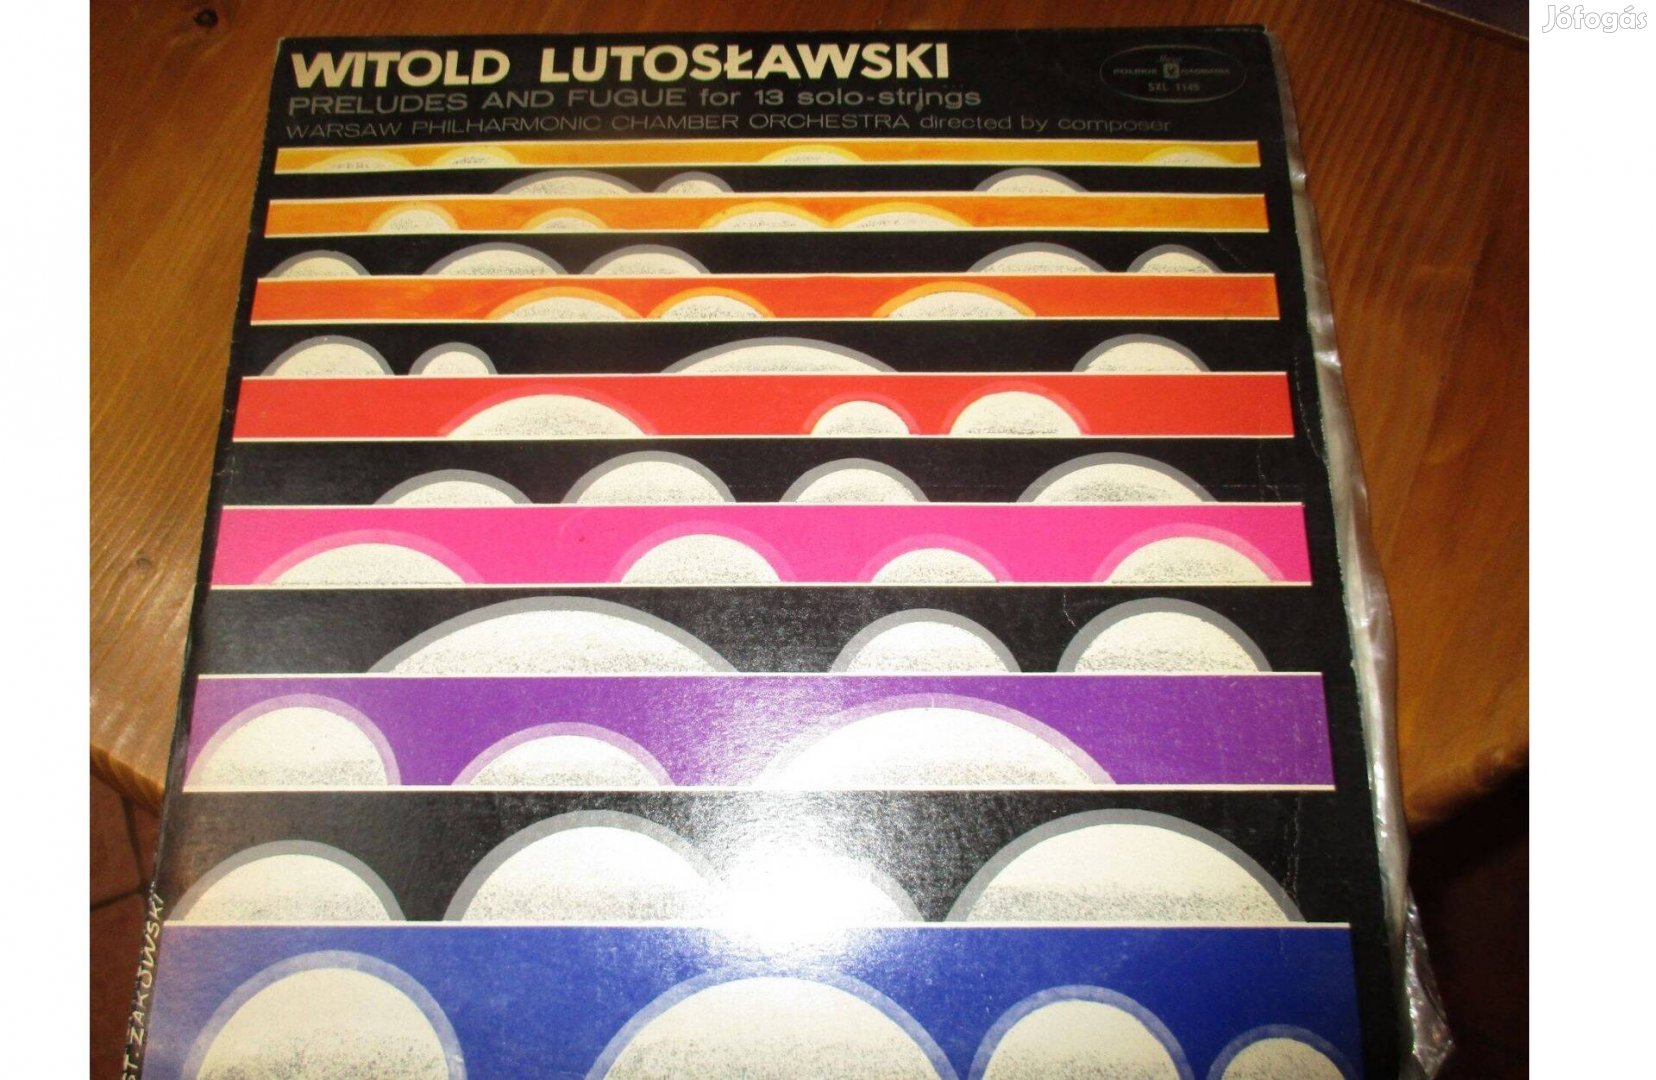 Witold Lutoslawski bakelit hanglemez eladó